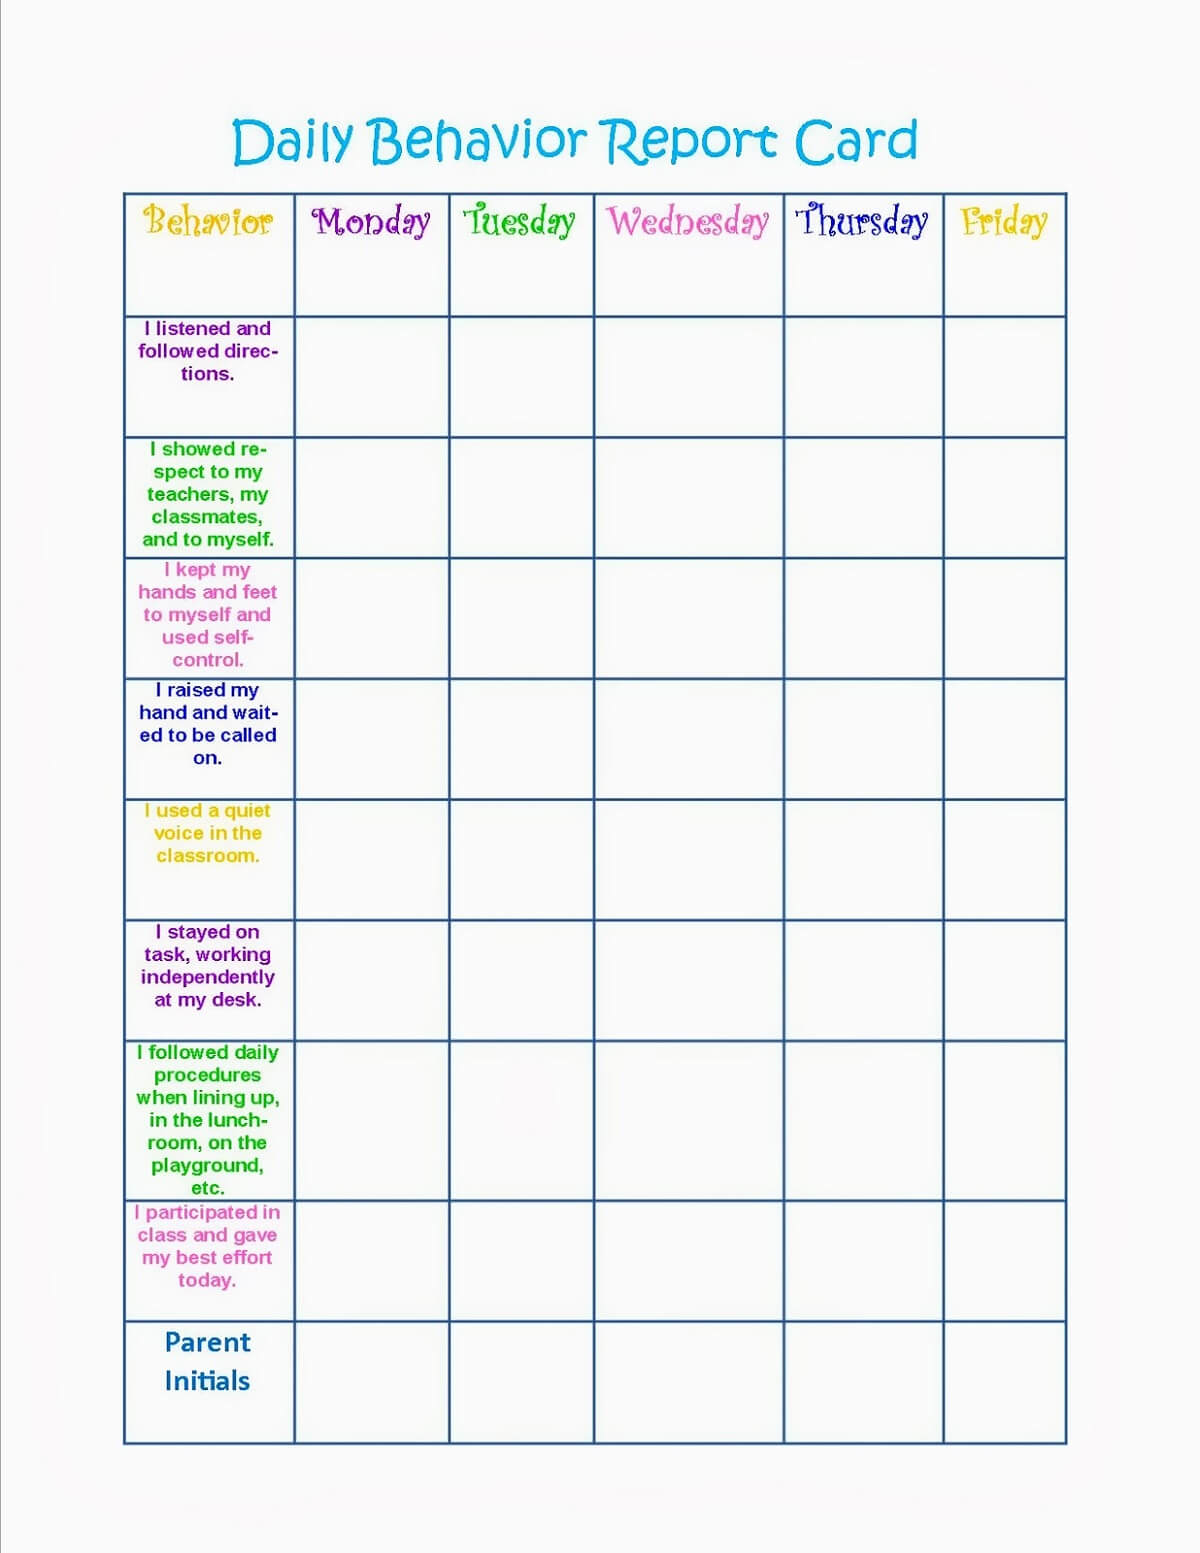 Daily Behavior Chart Printable Colorful | Loving Printable Throughout Daily Behavior Report Template